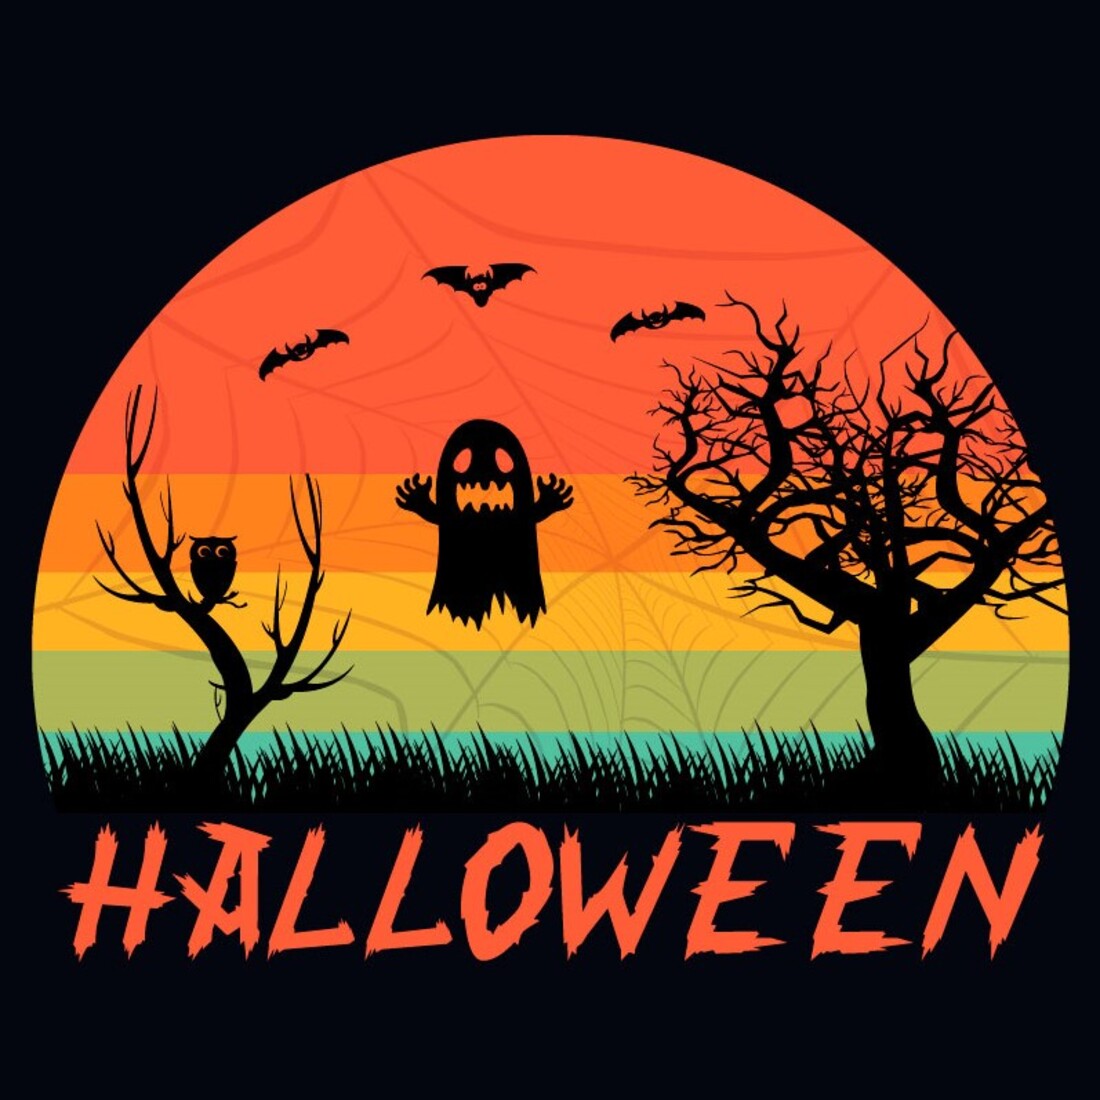 Retro Halloween T-shirt Design cover image.